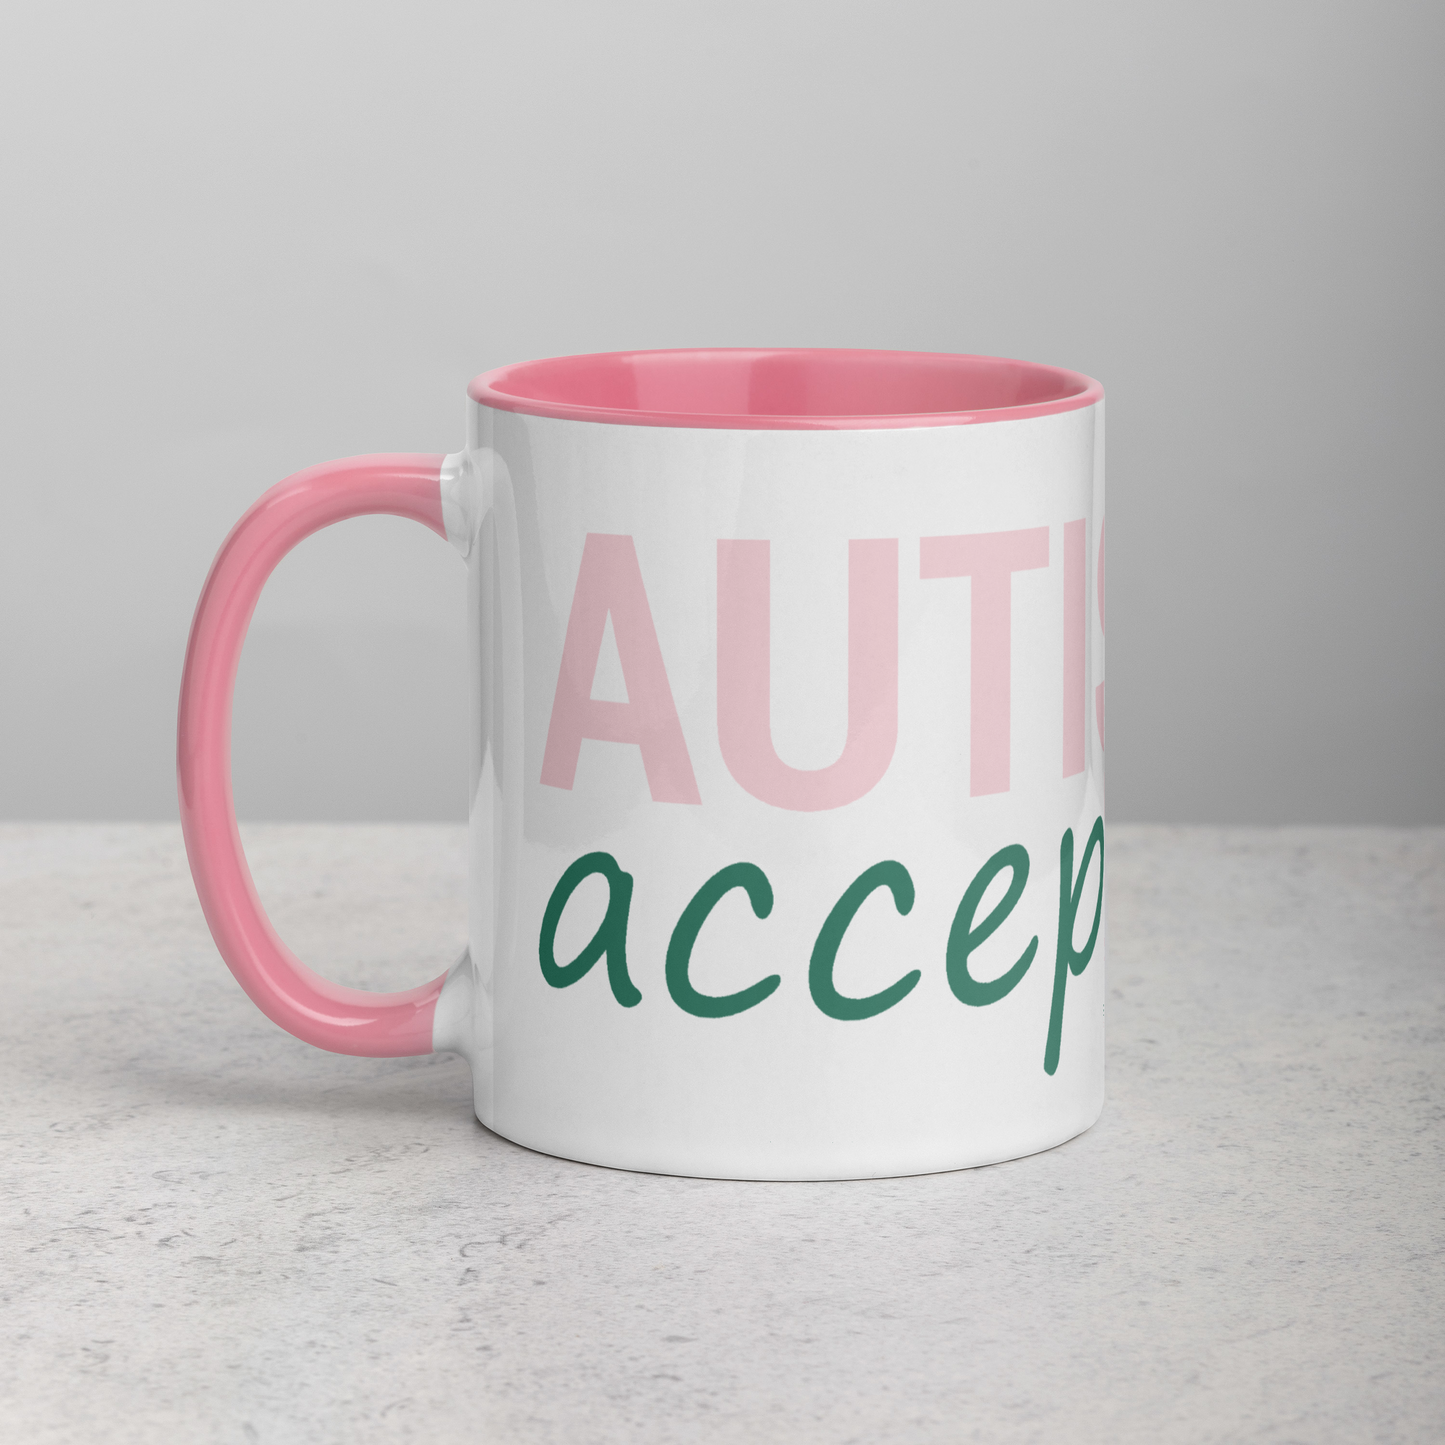 Autism Acceptance Mug (Pink)